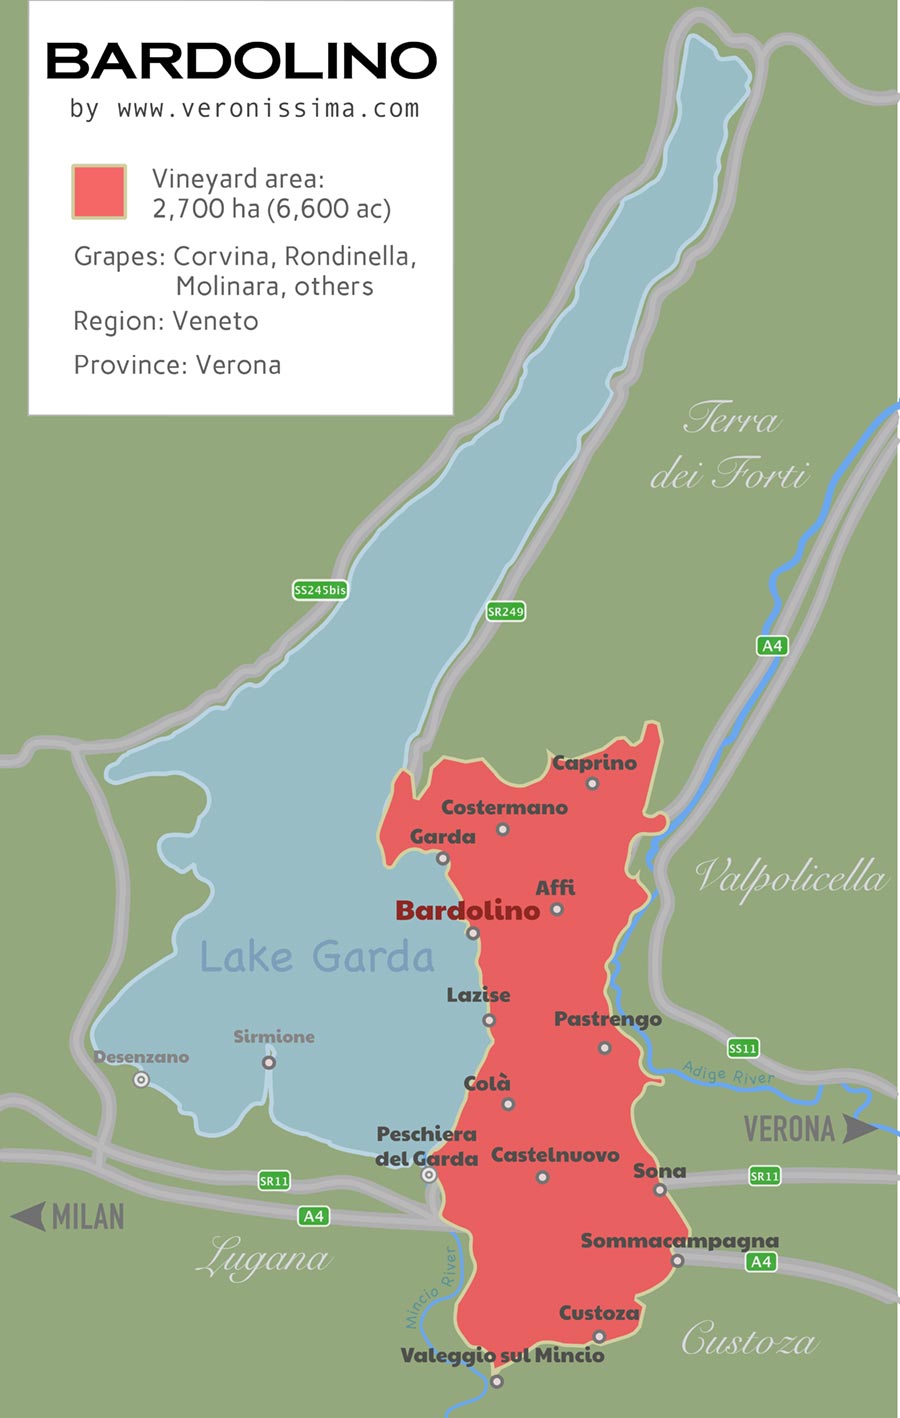 Bardolino DOC wine producing region map